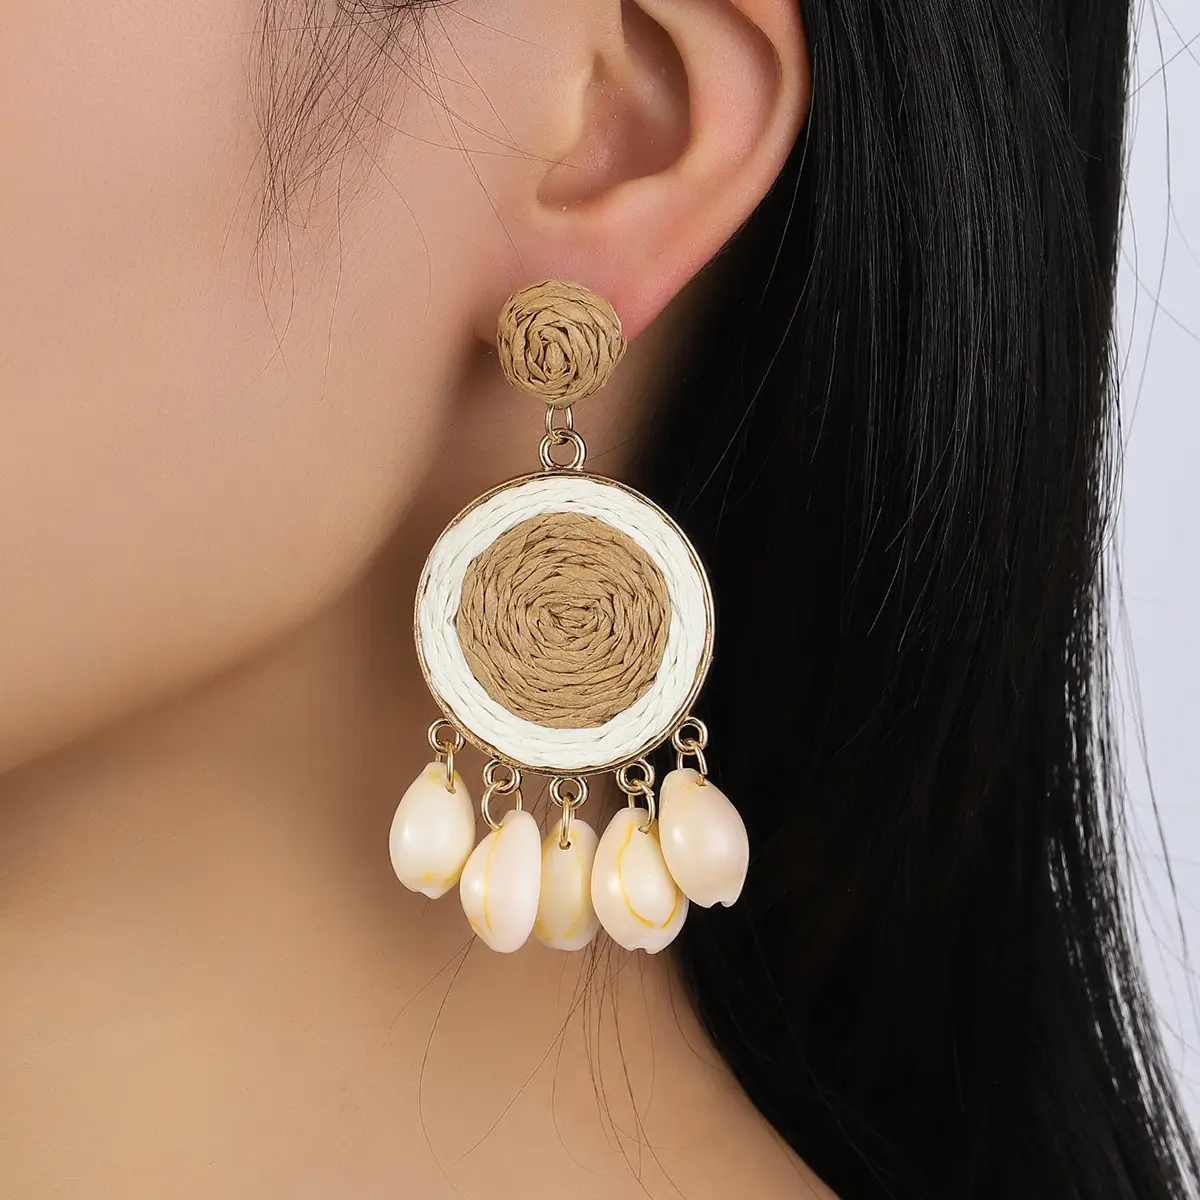 Cross border summer seaside vacation style handcrafted earrings, rattan grass woven circular shell pendant earrings